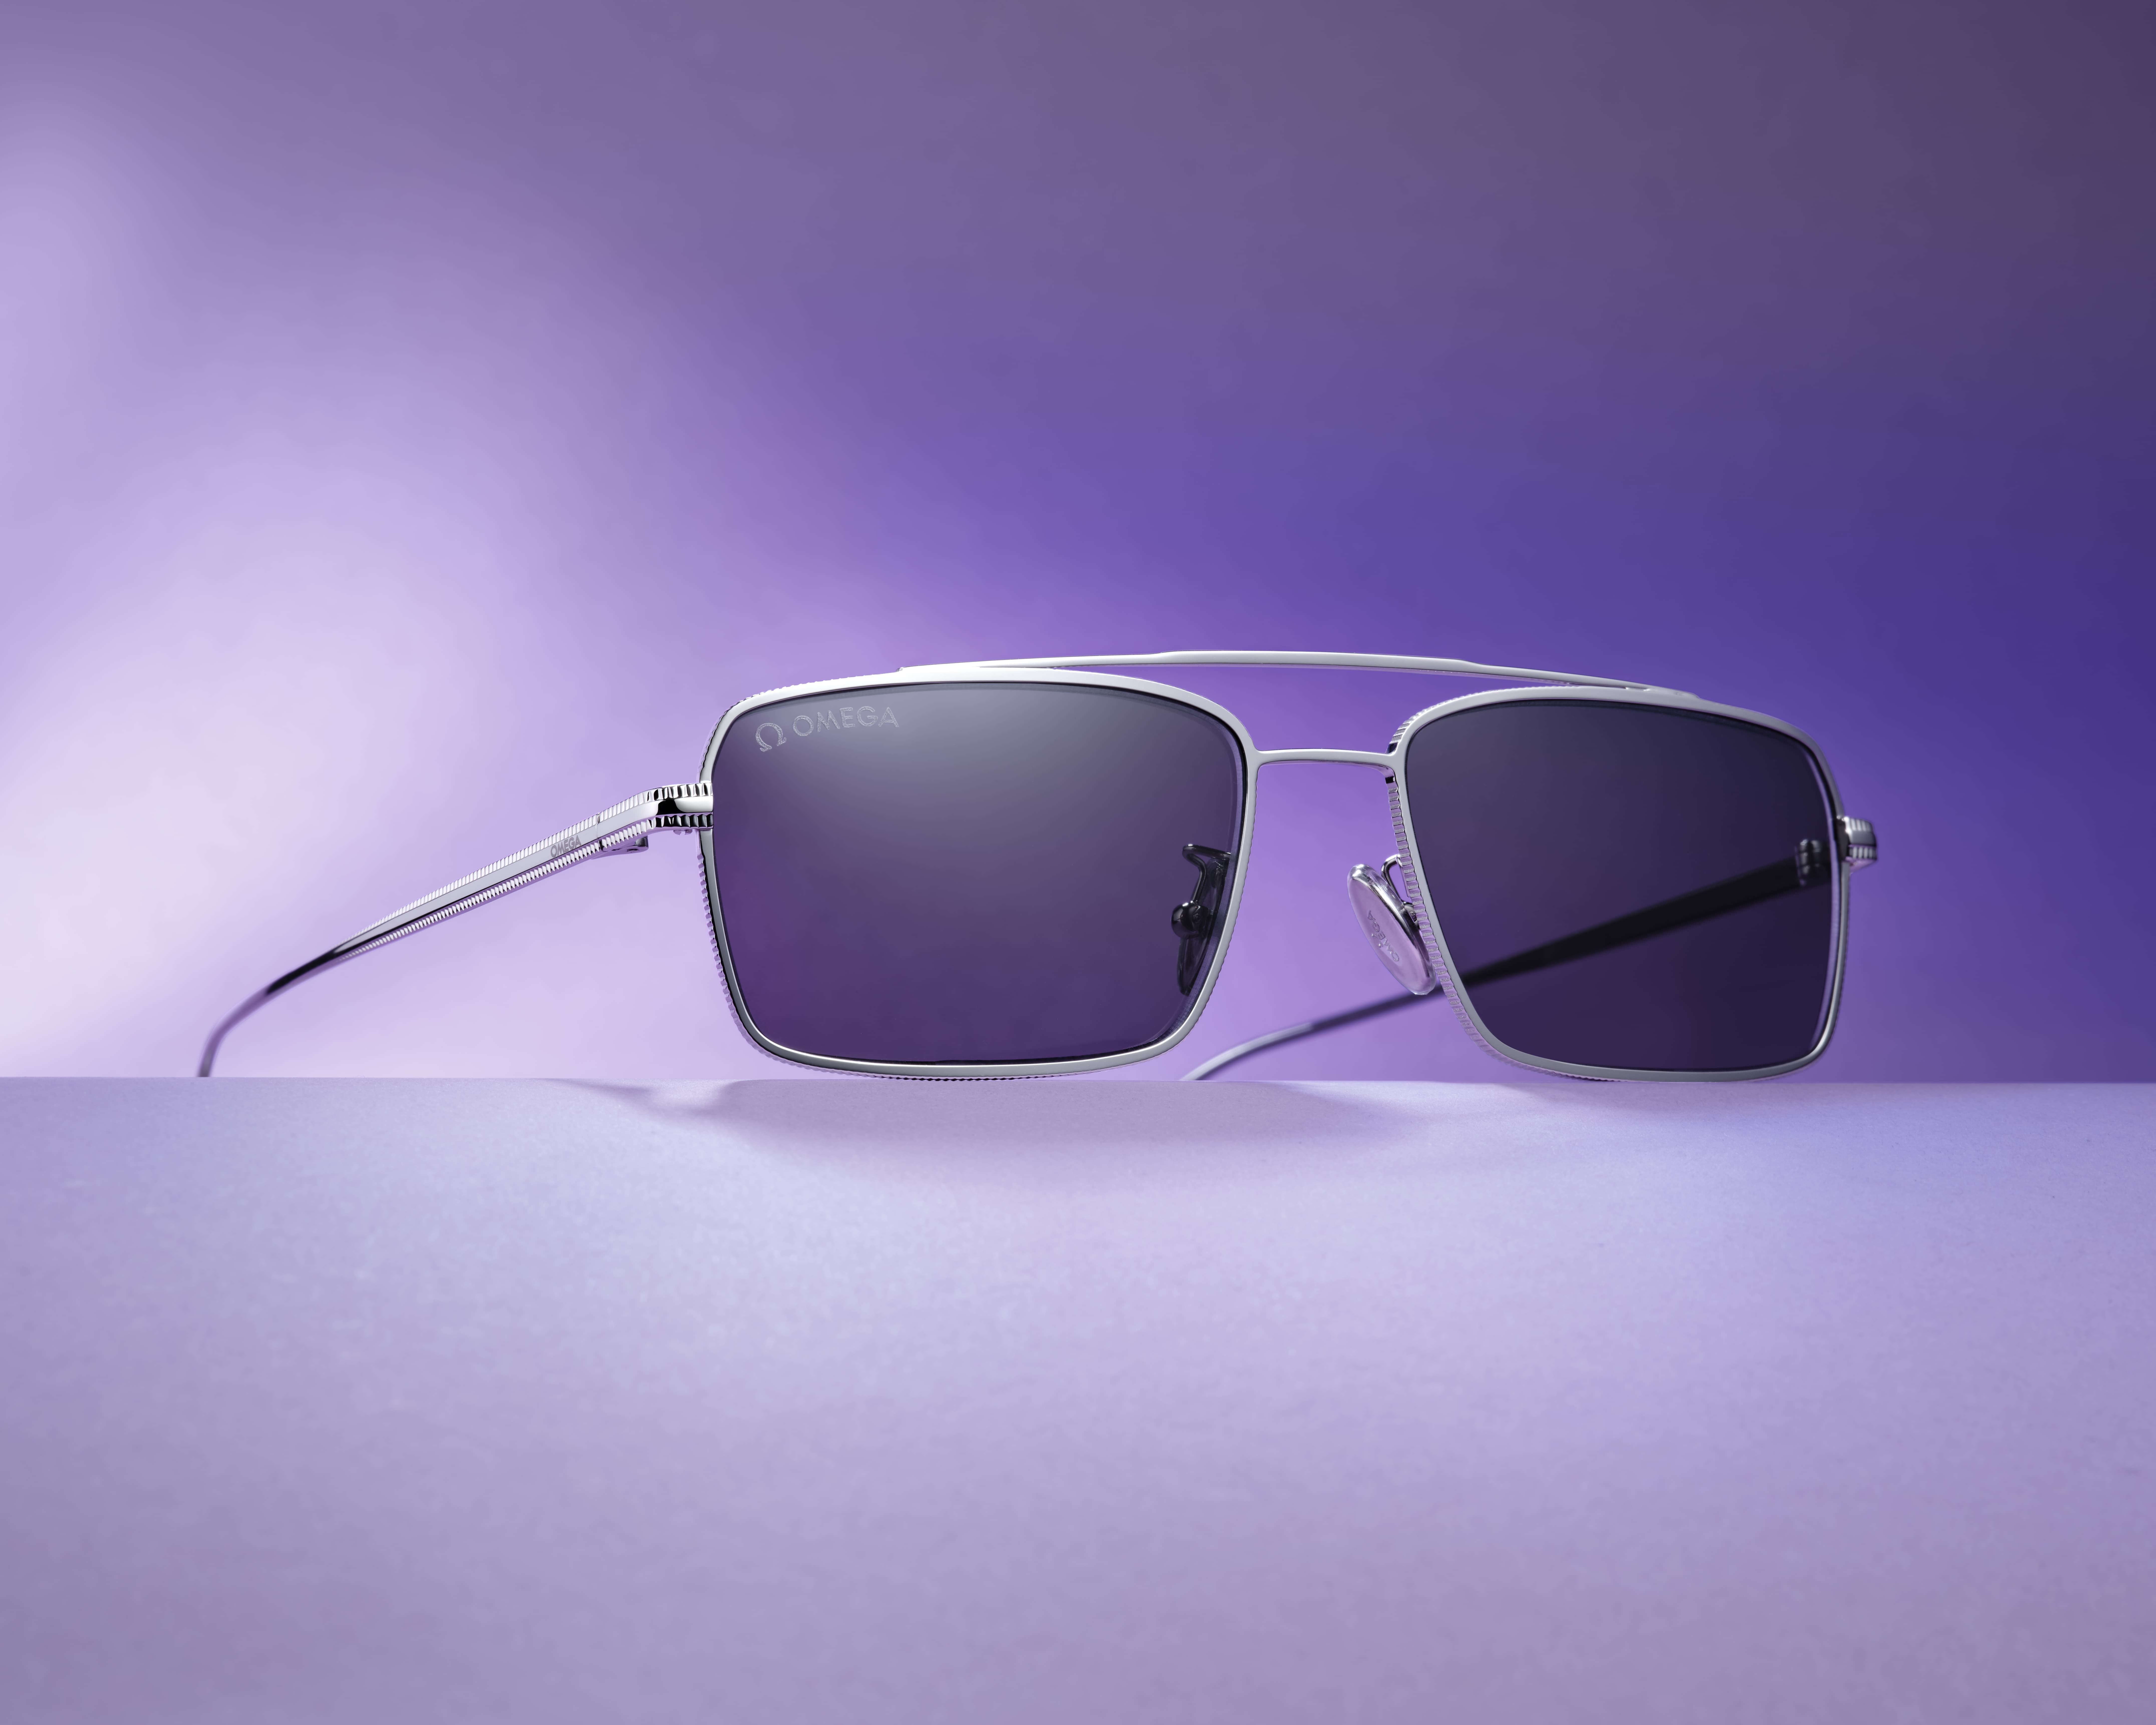 OMEGA Sunglasses 2021 Collection